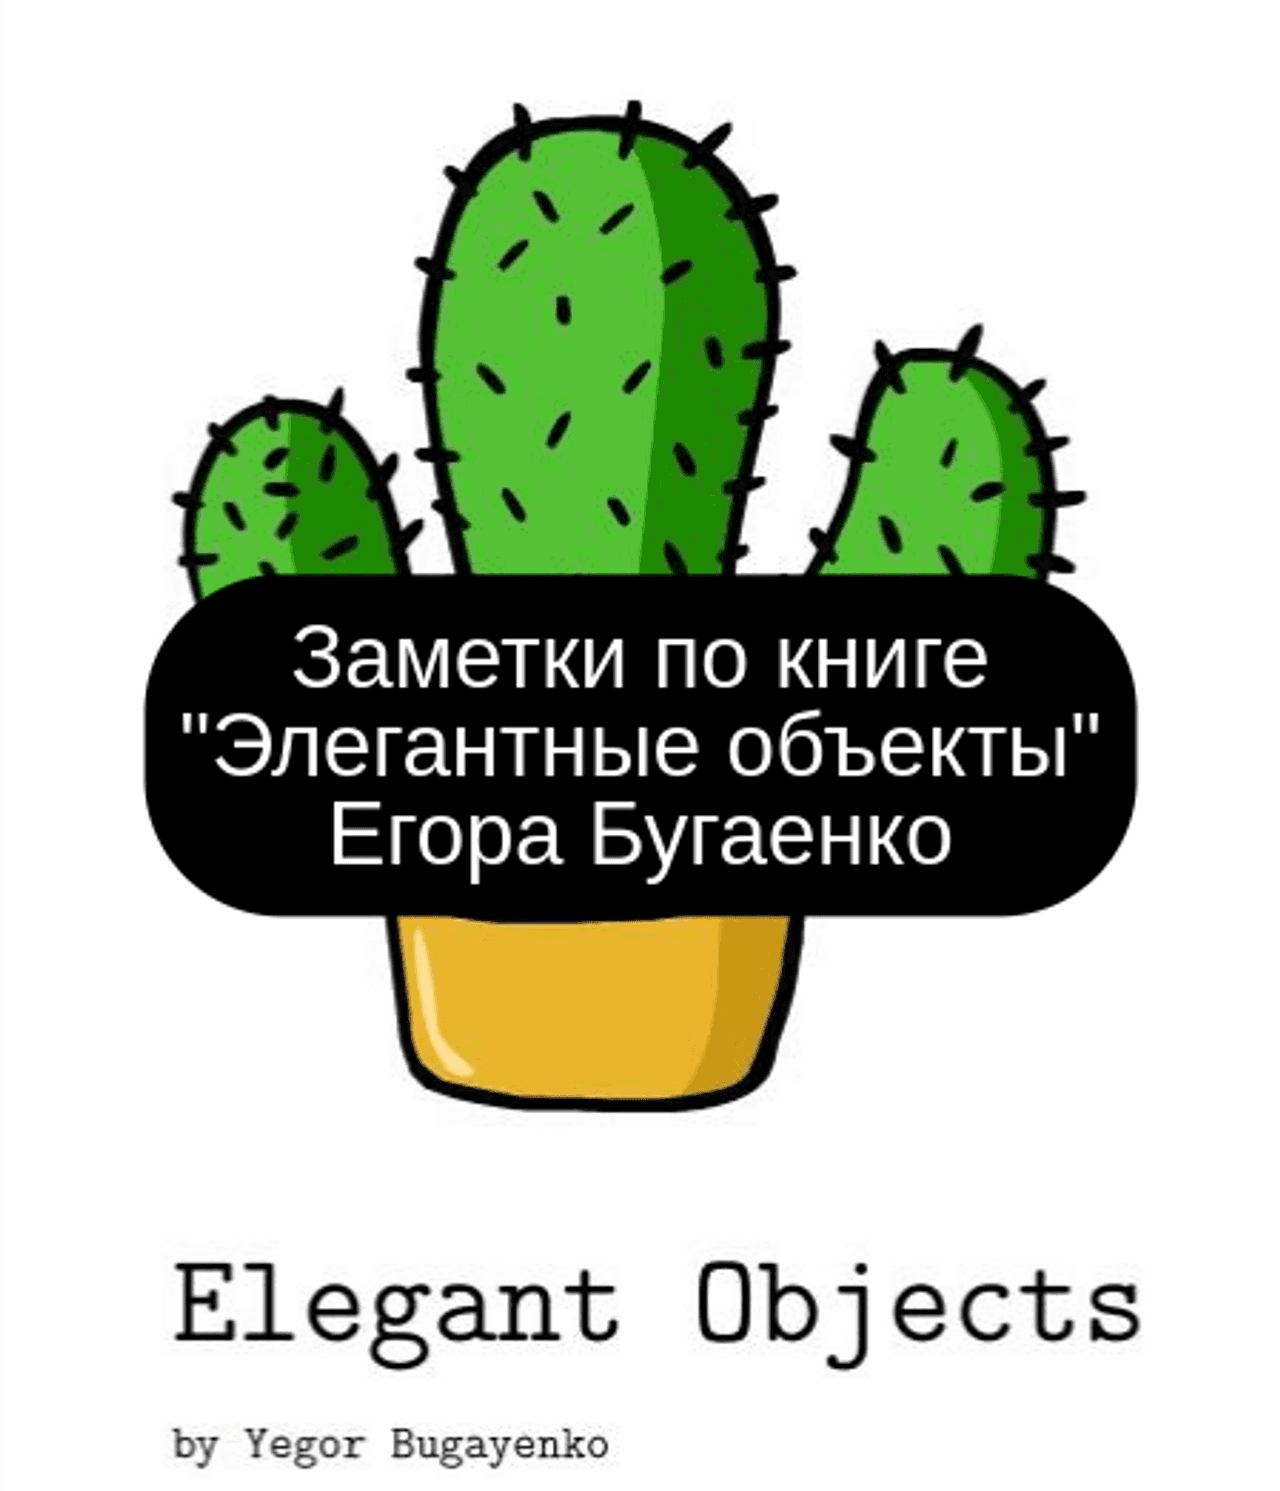 Заметки по книге Элегантные объекты Егора Бугаенко